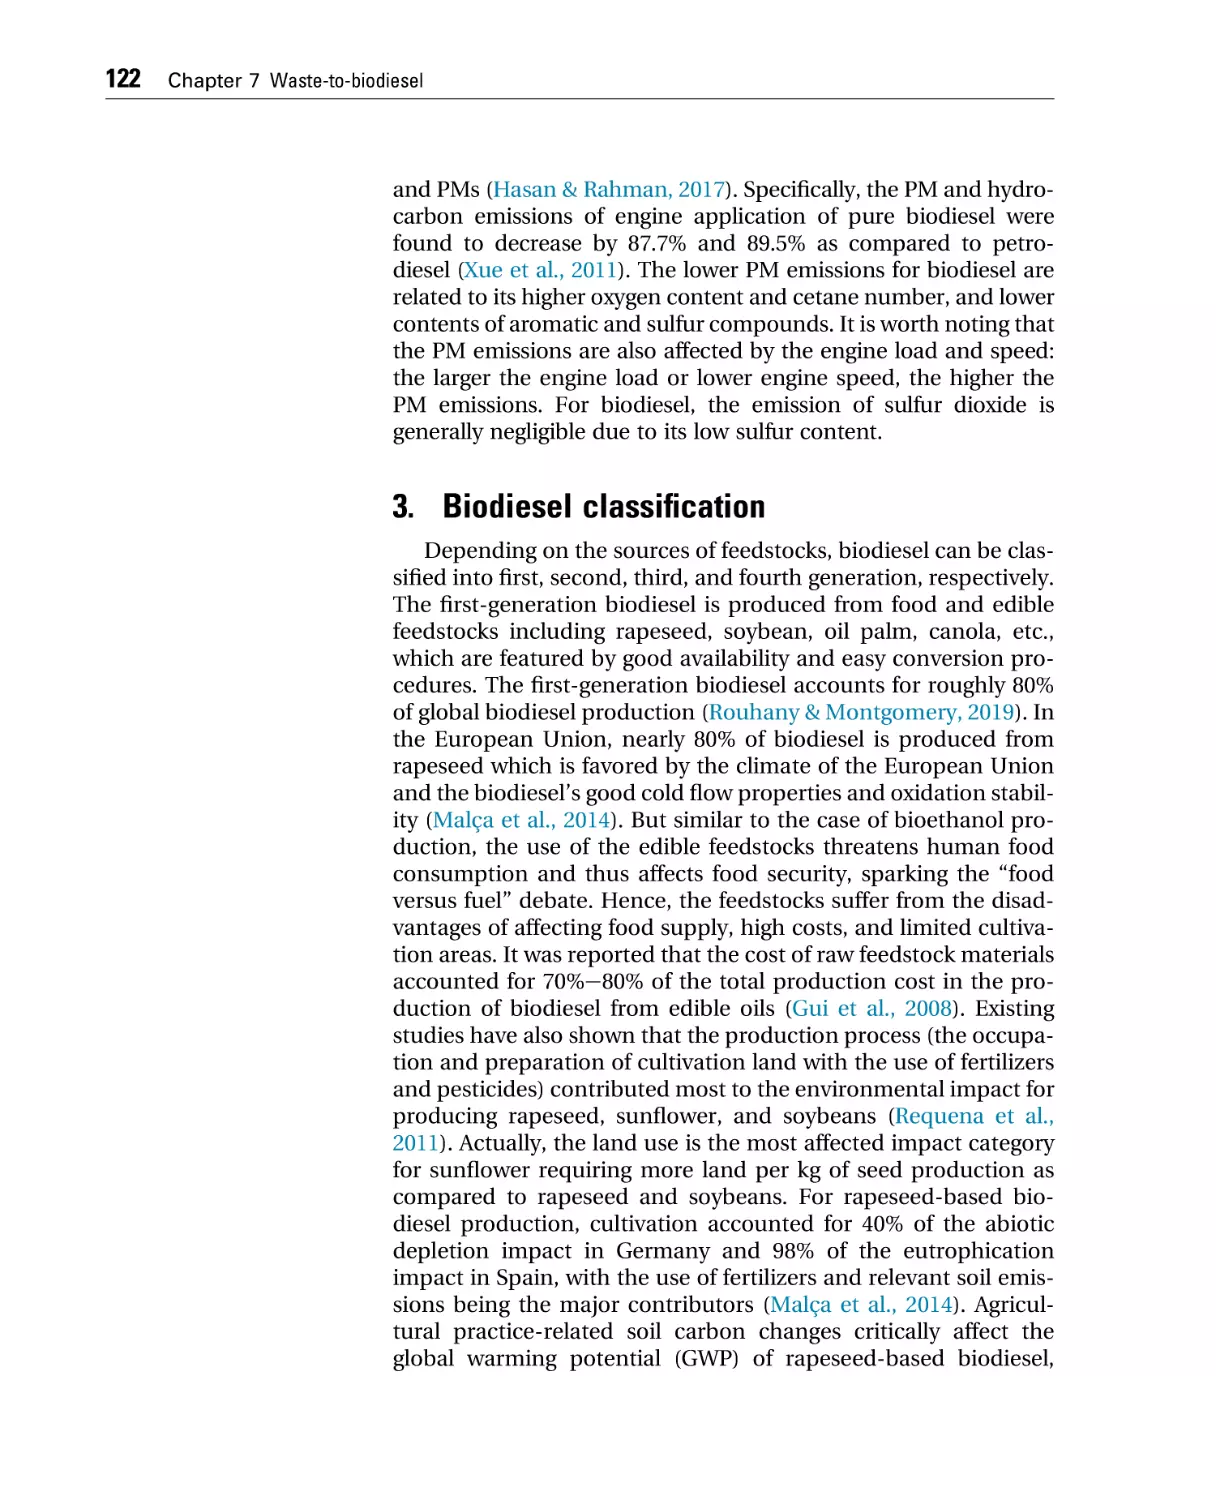 3. Biodiesel classification